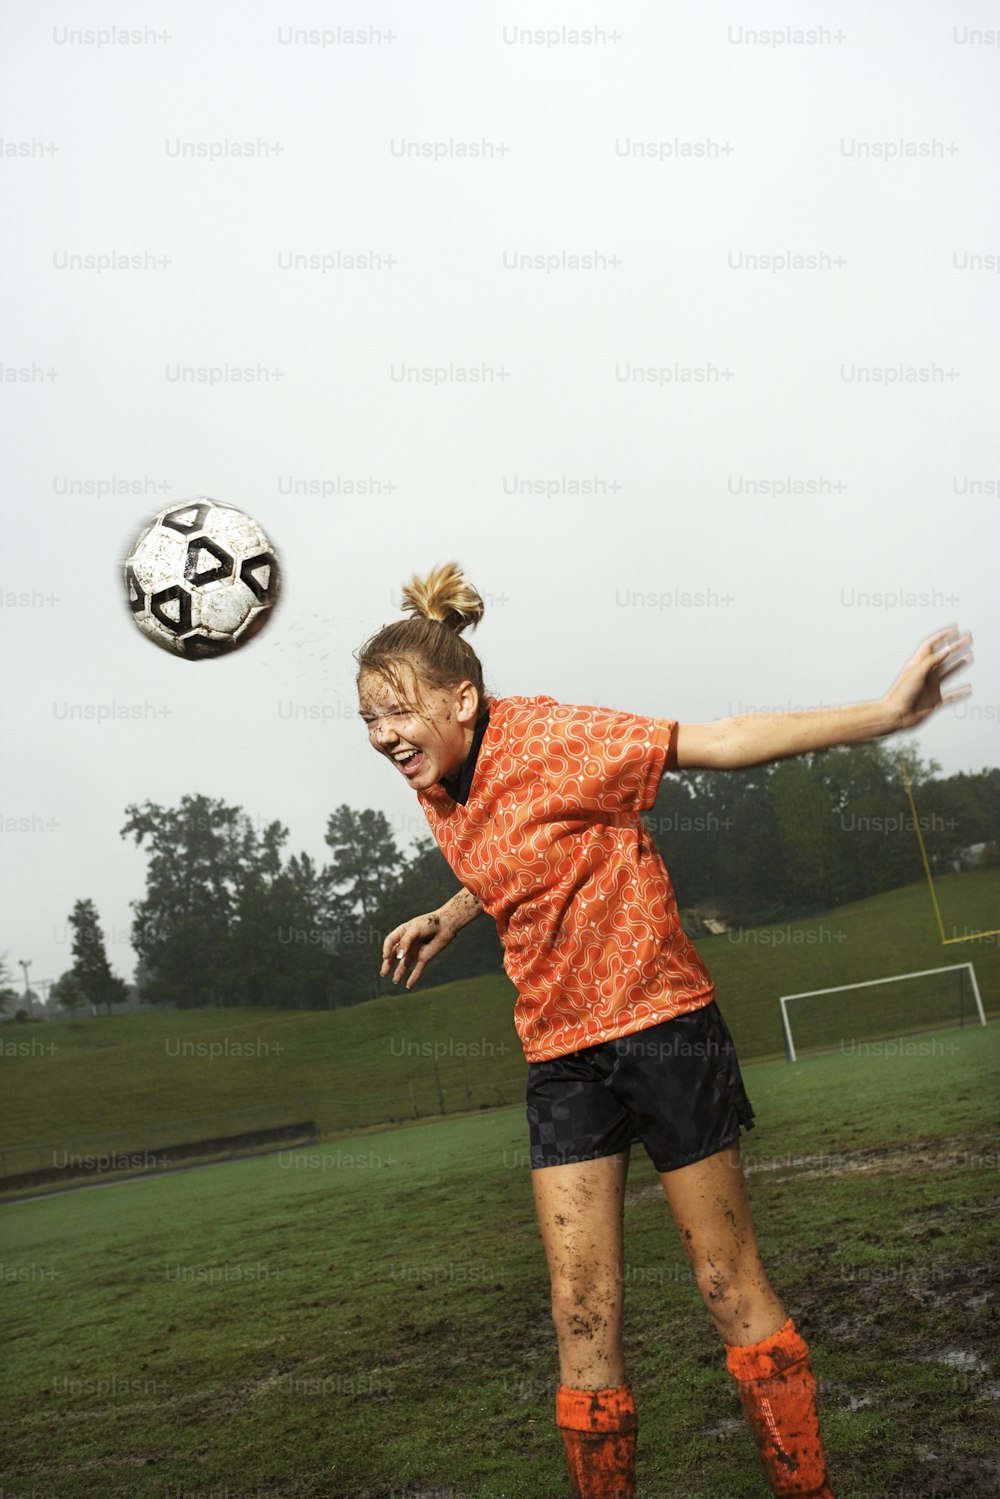 a woman in an orange shirt and black shorts kicking a soccer ball